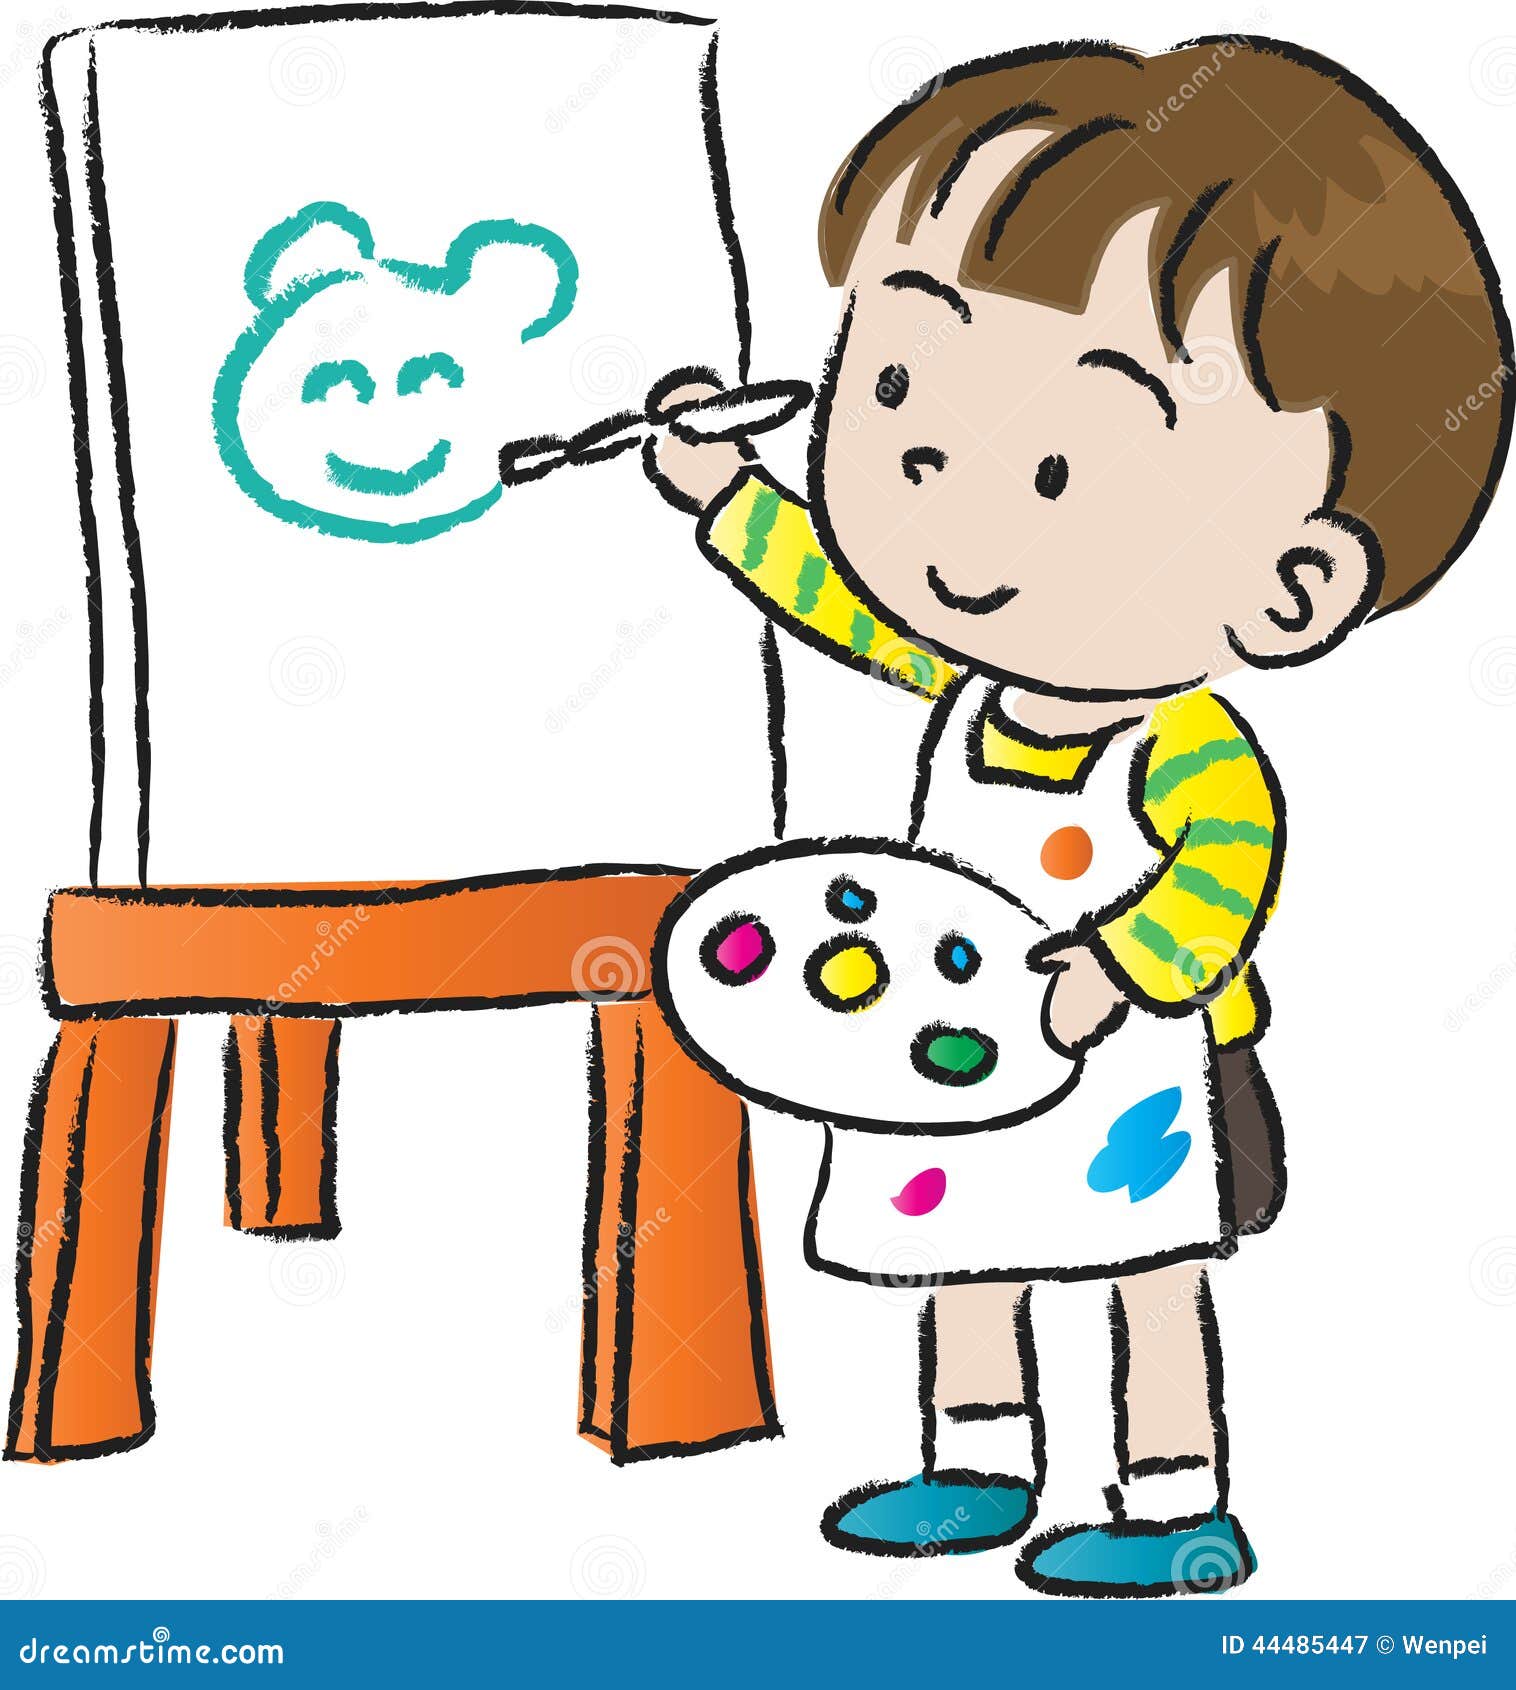 Children drawing stock illustration. Illustration of cute - 44485447